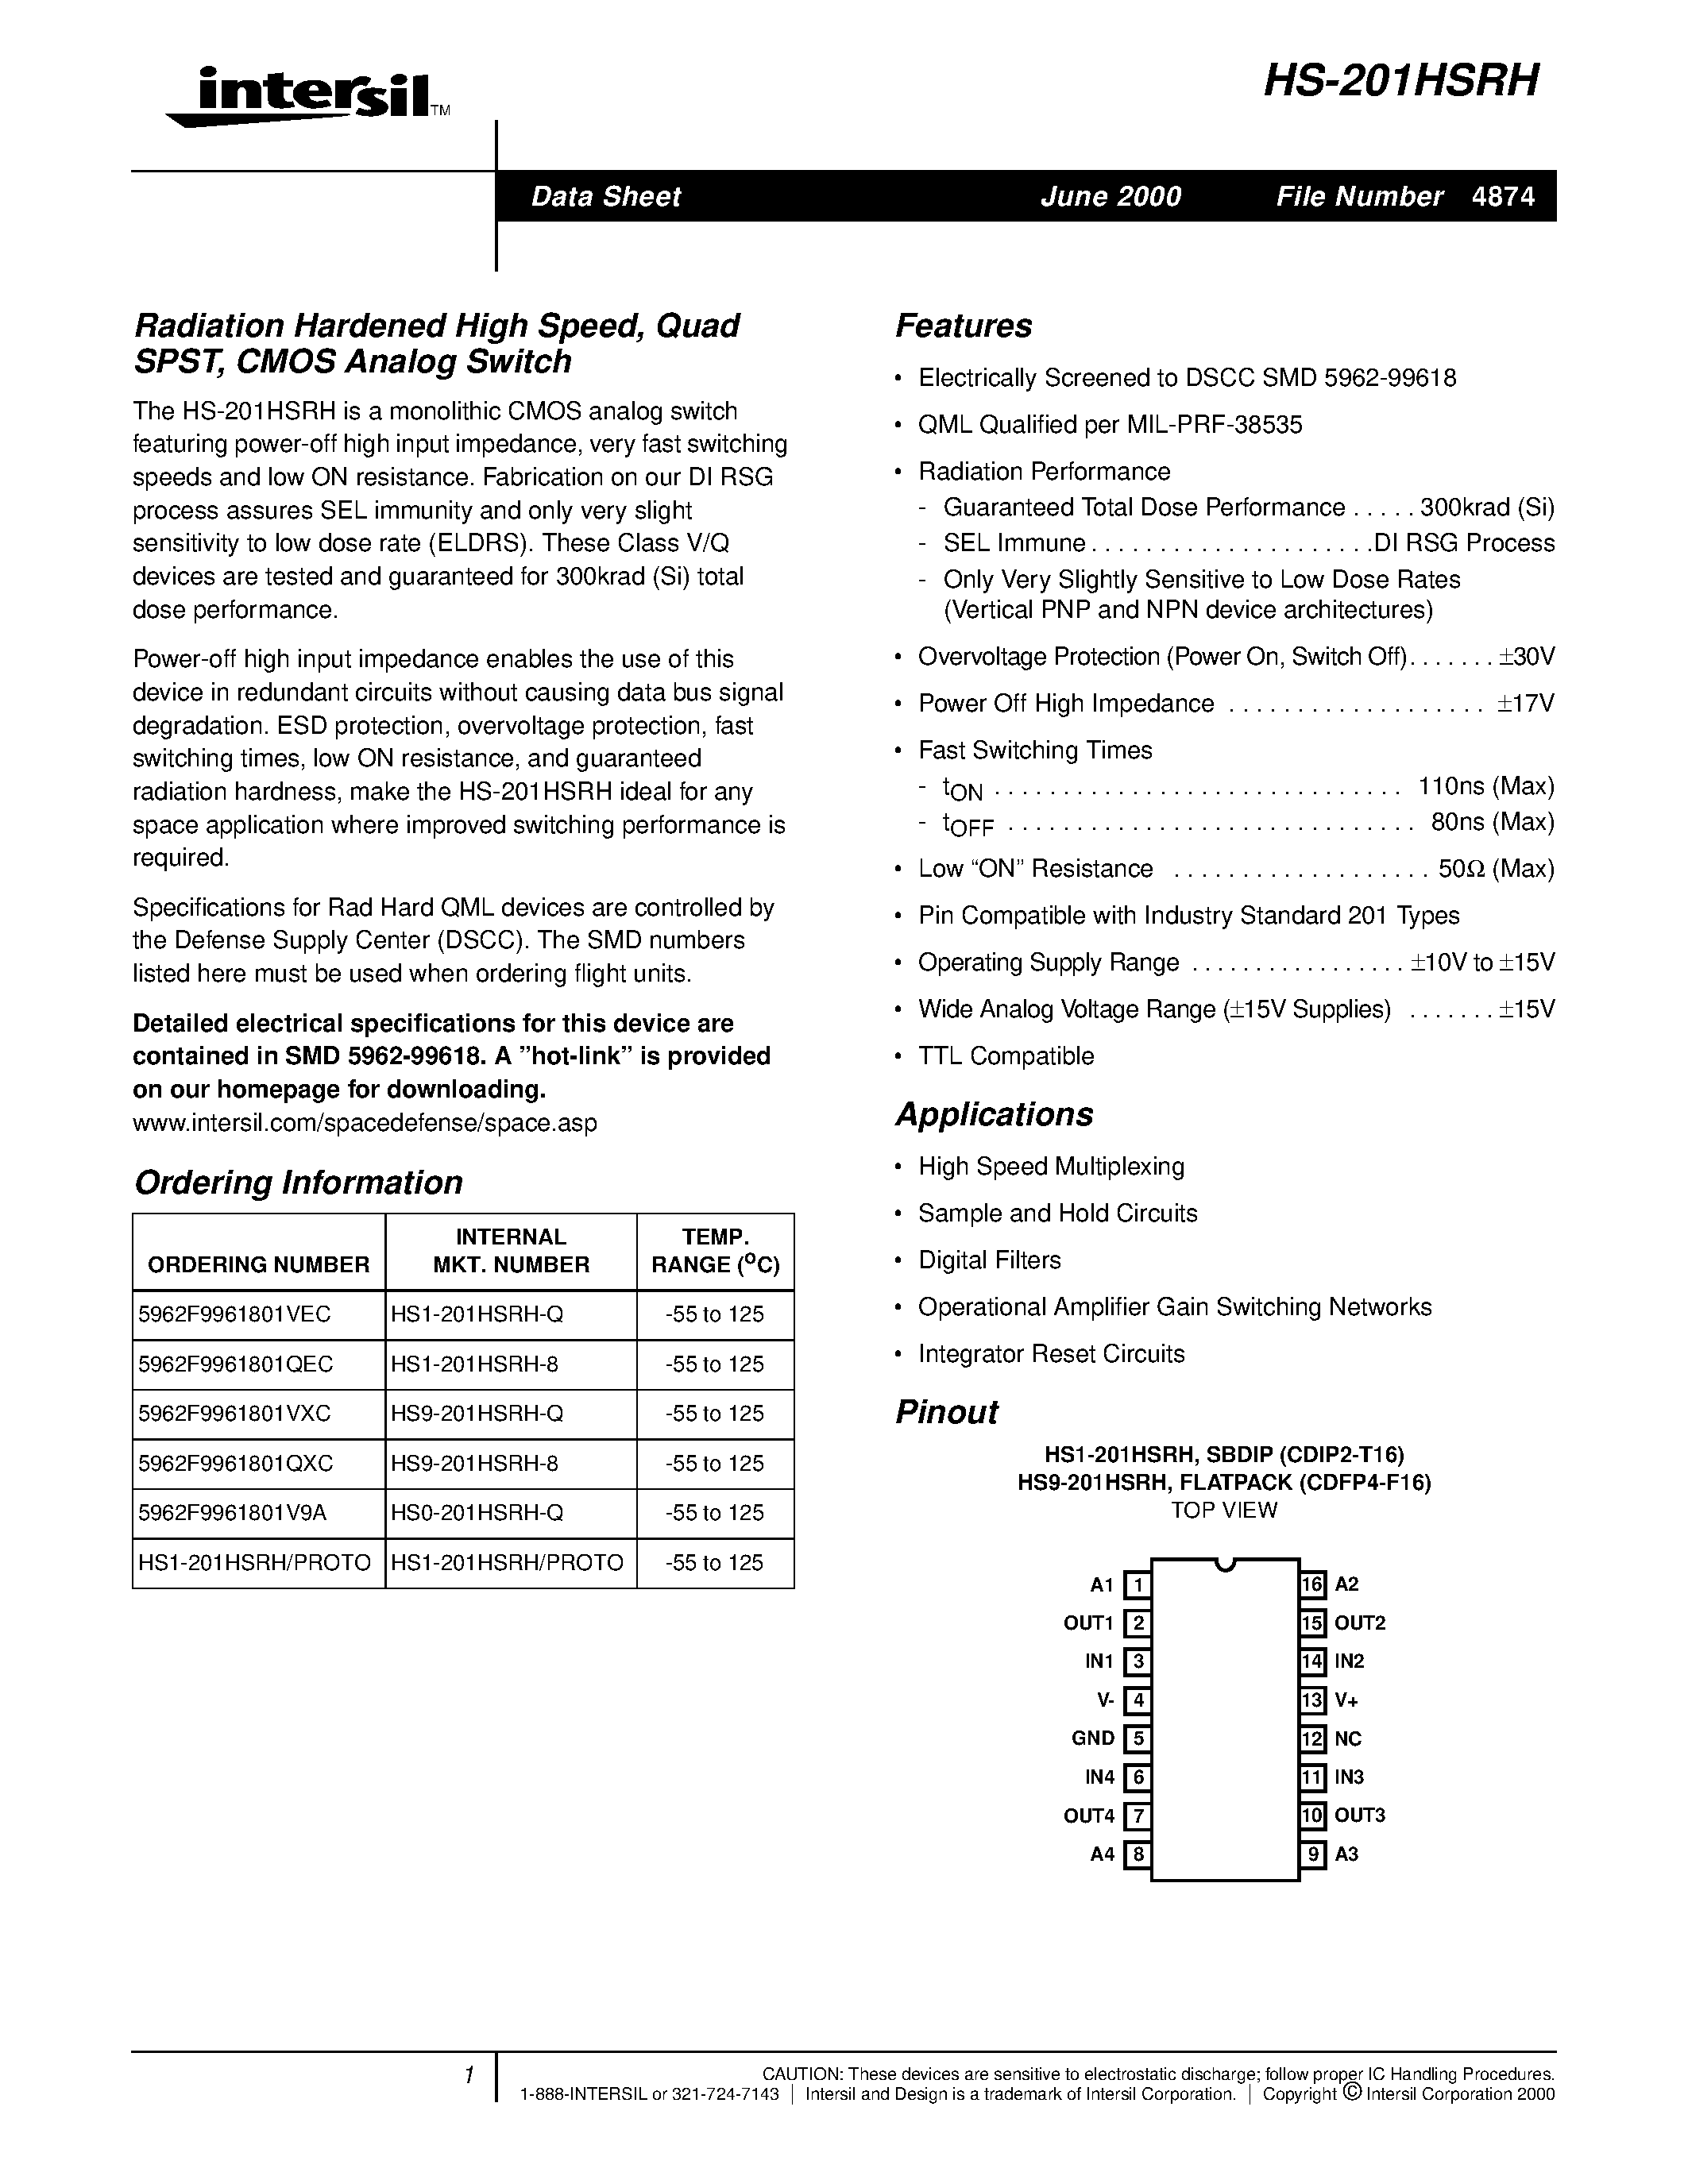 Datasheet HS0-201HSRH-Q - Radiation Hardened High Speed/ Quad SPST/ CMOS Analog Switch page 1